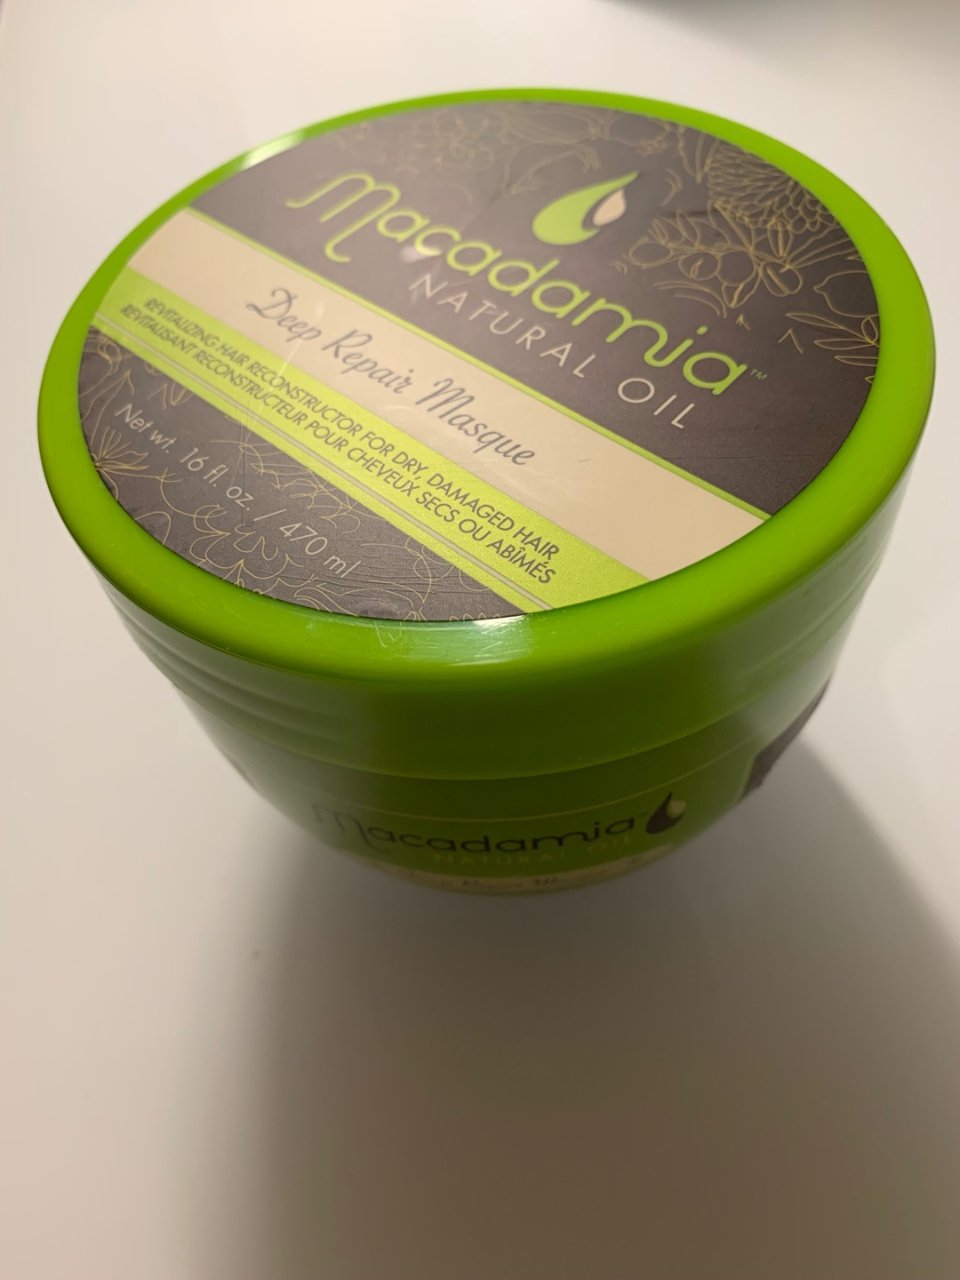 Macadamia Natural Oil